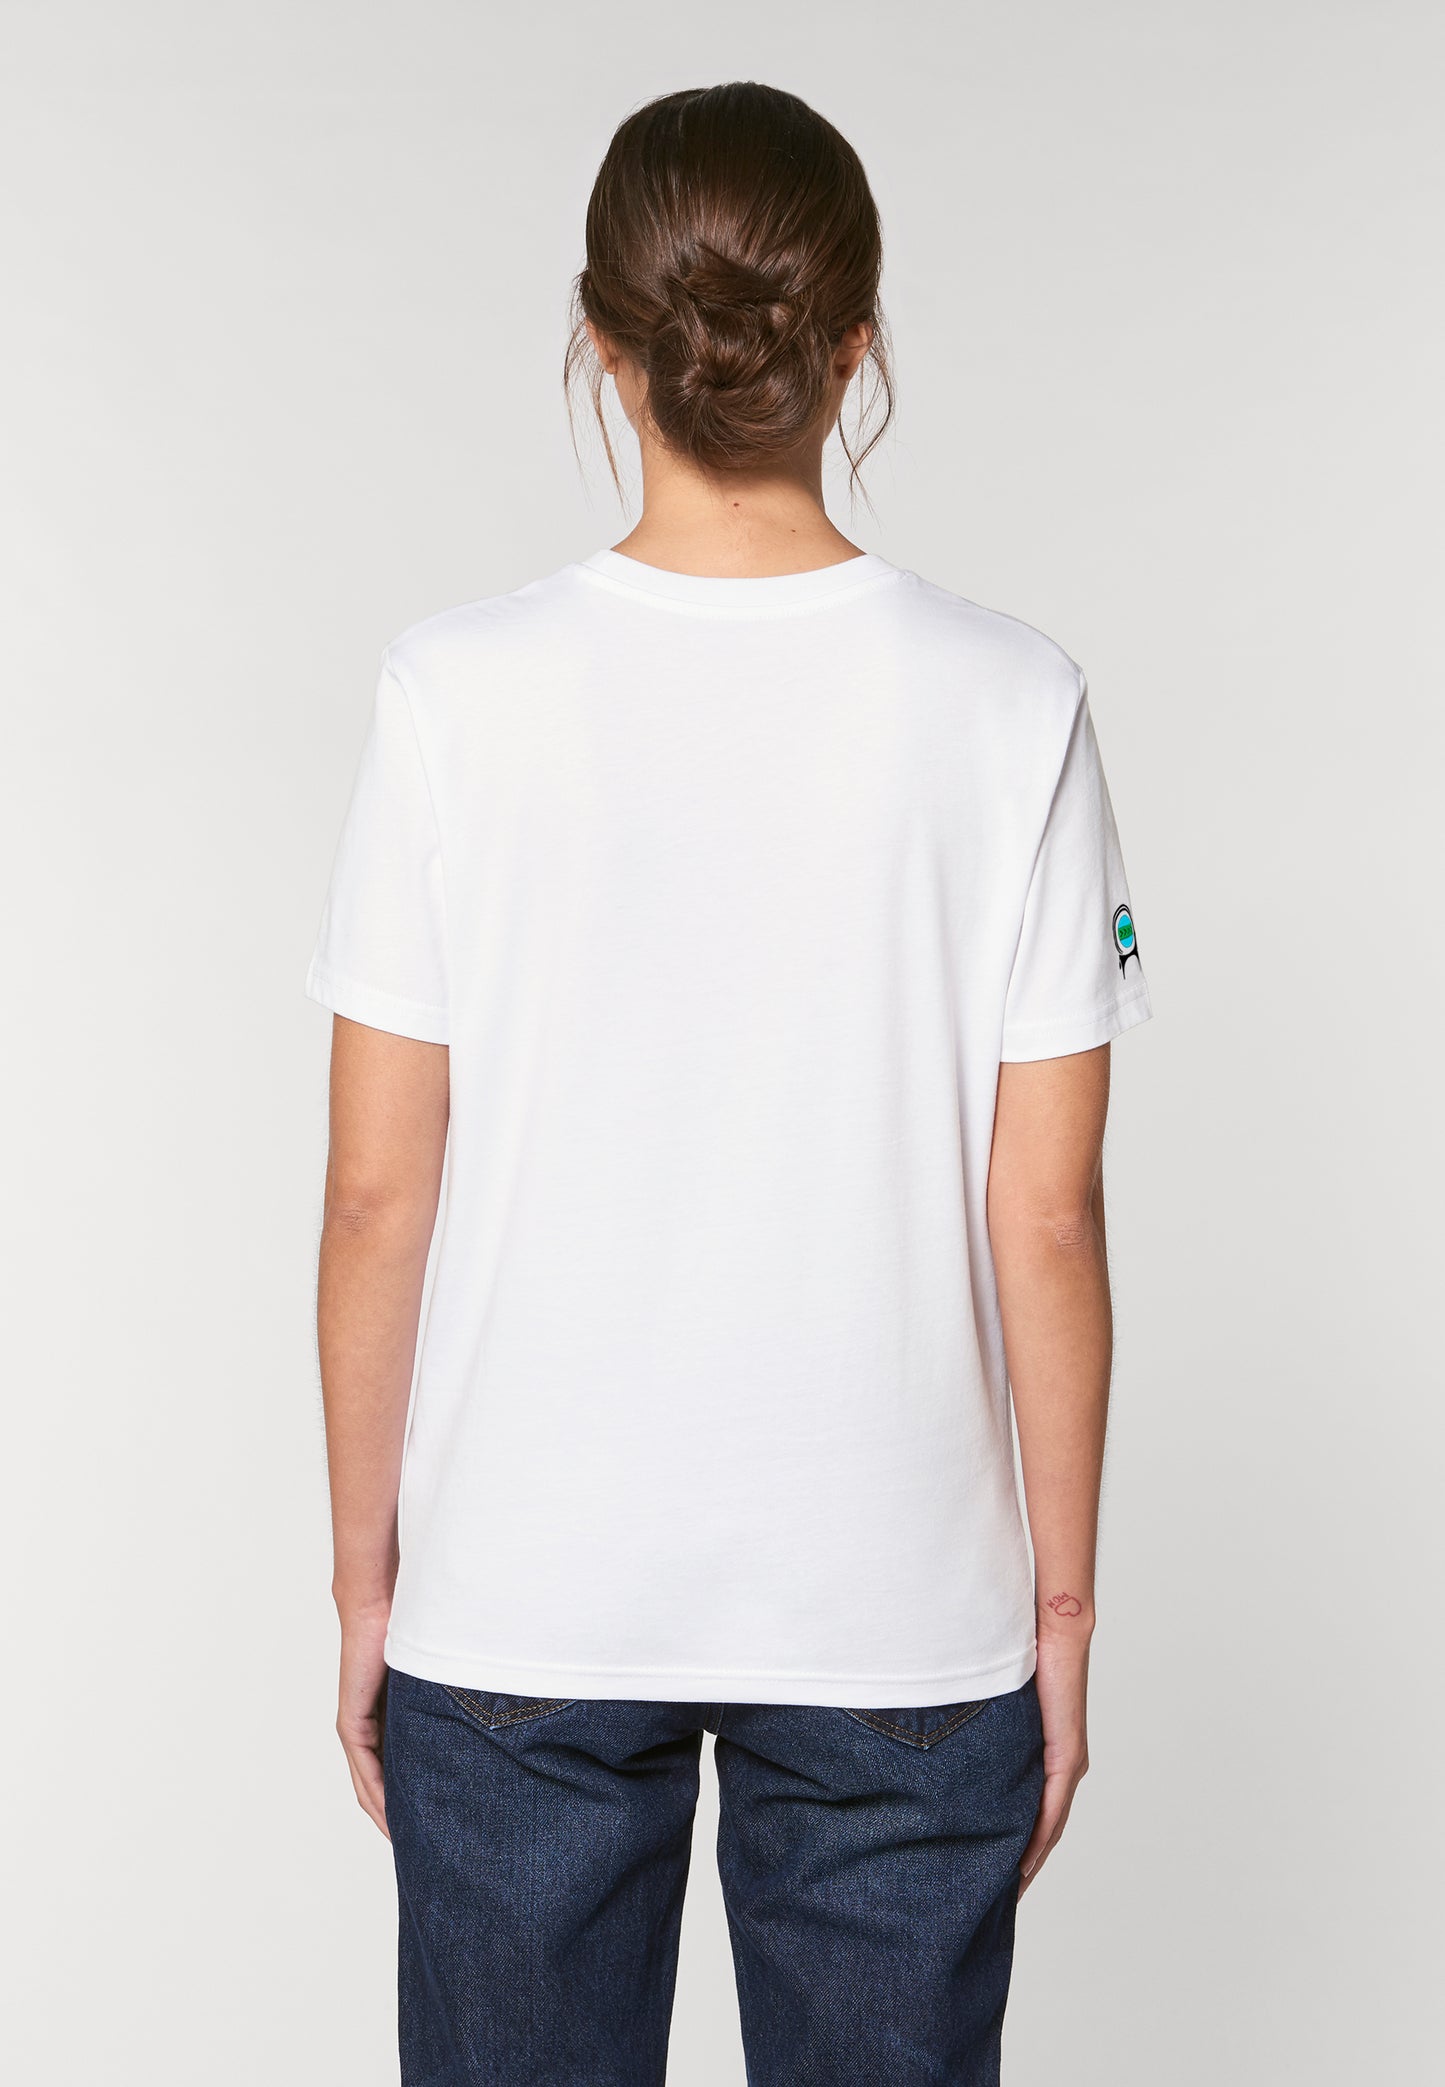 CAPRA-EARTH Unisex T-shirt , Vegan T-shirt in White Cotton Jersey